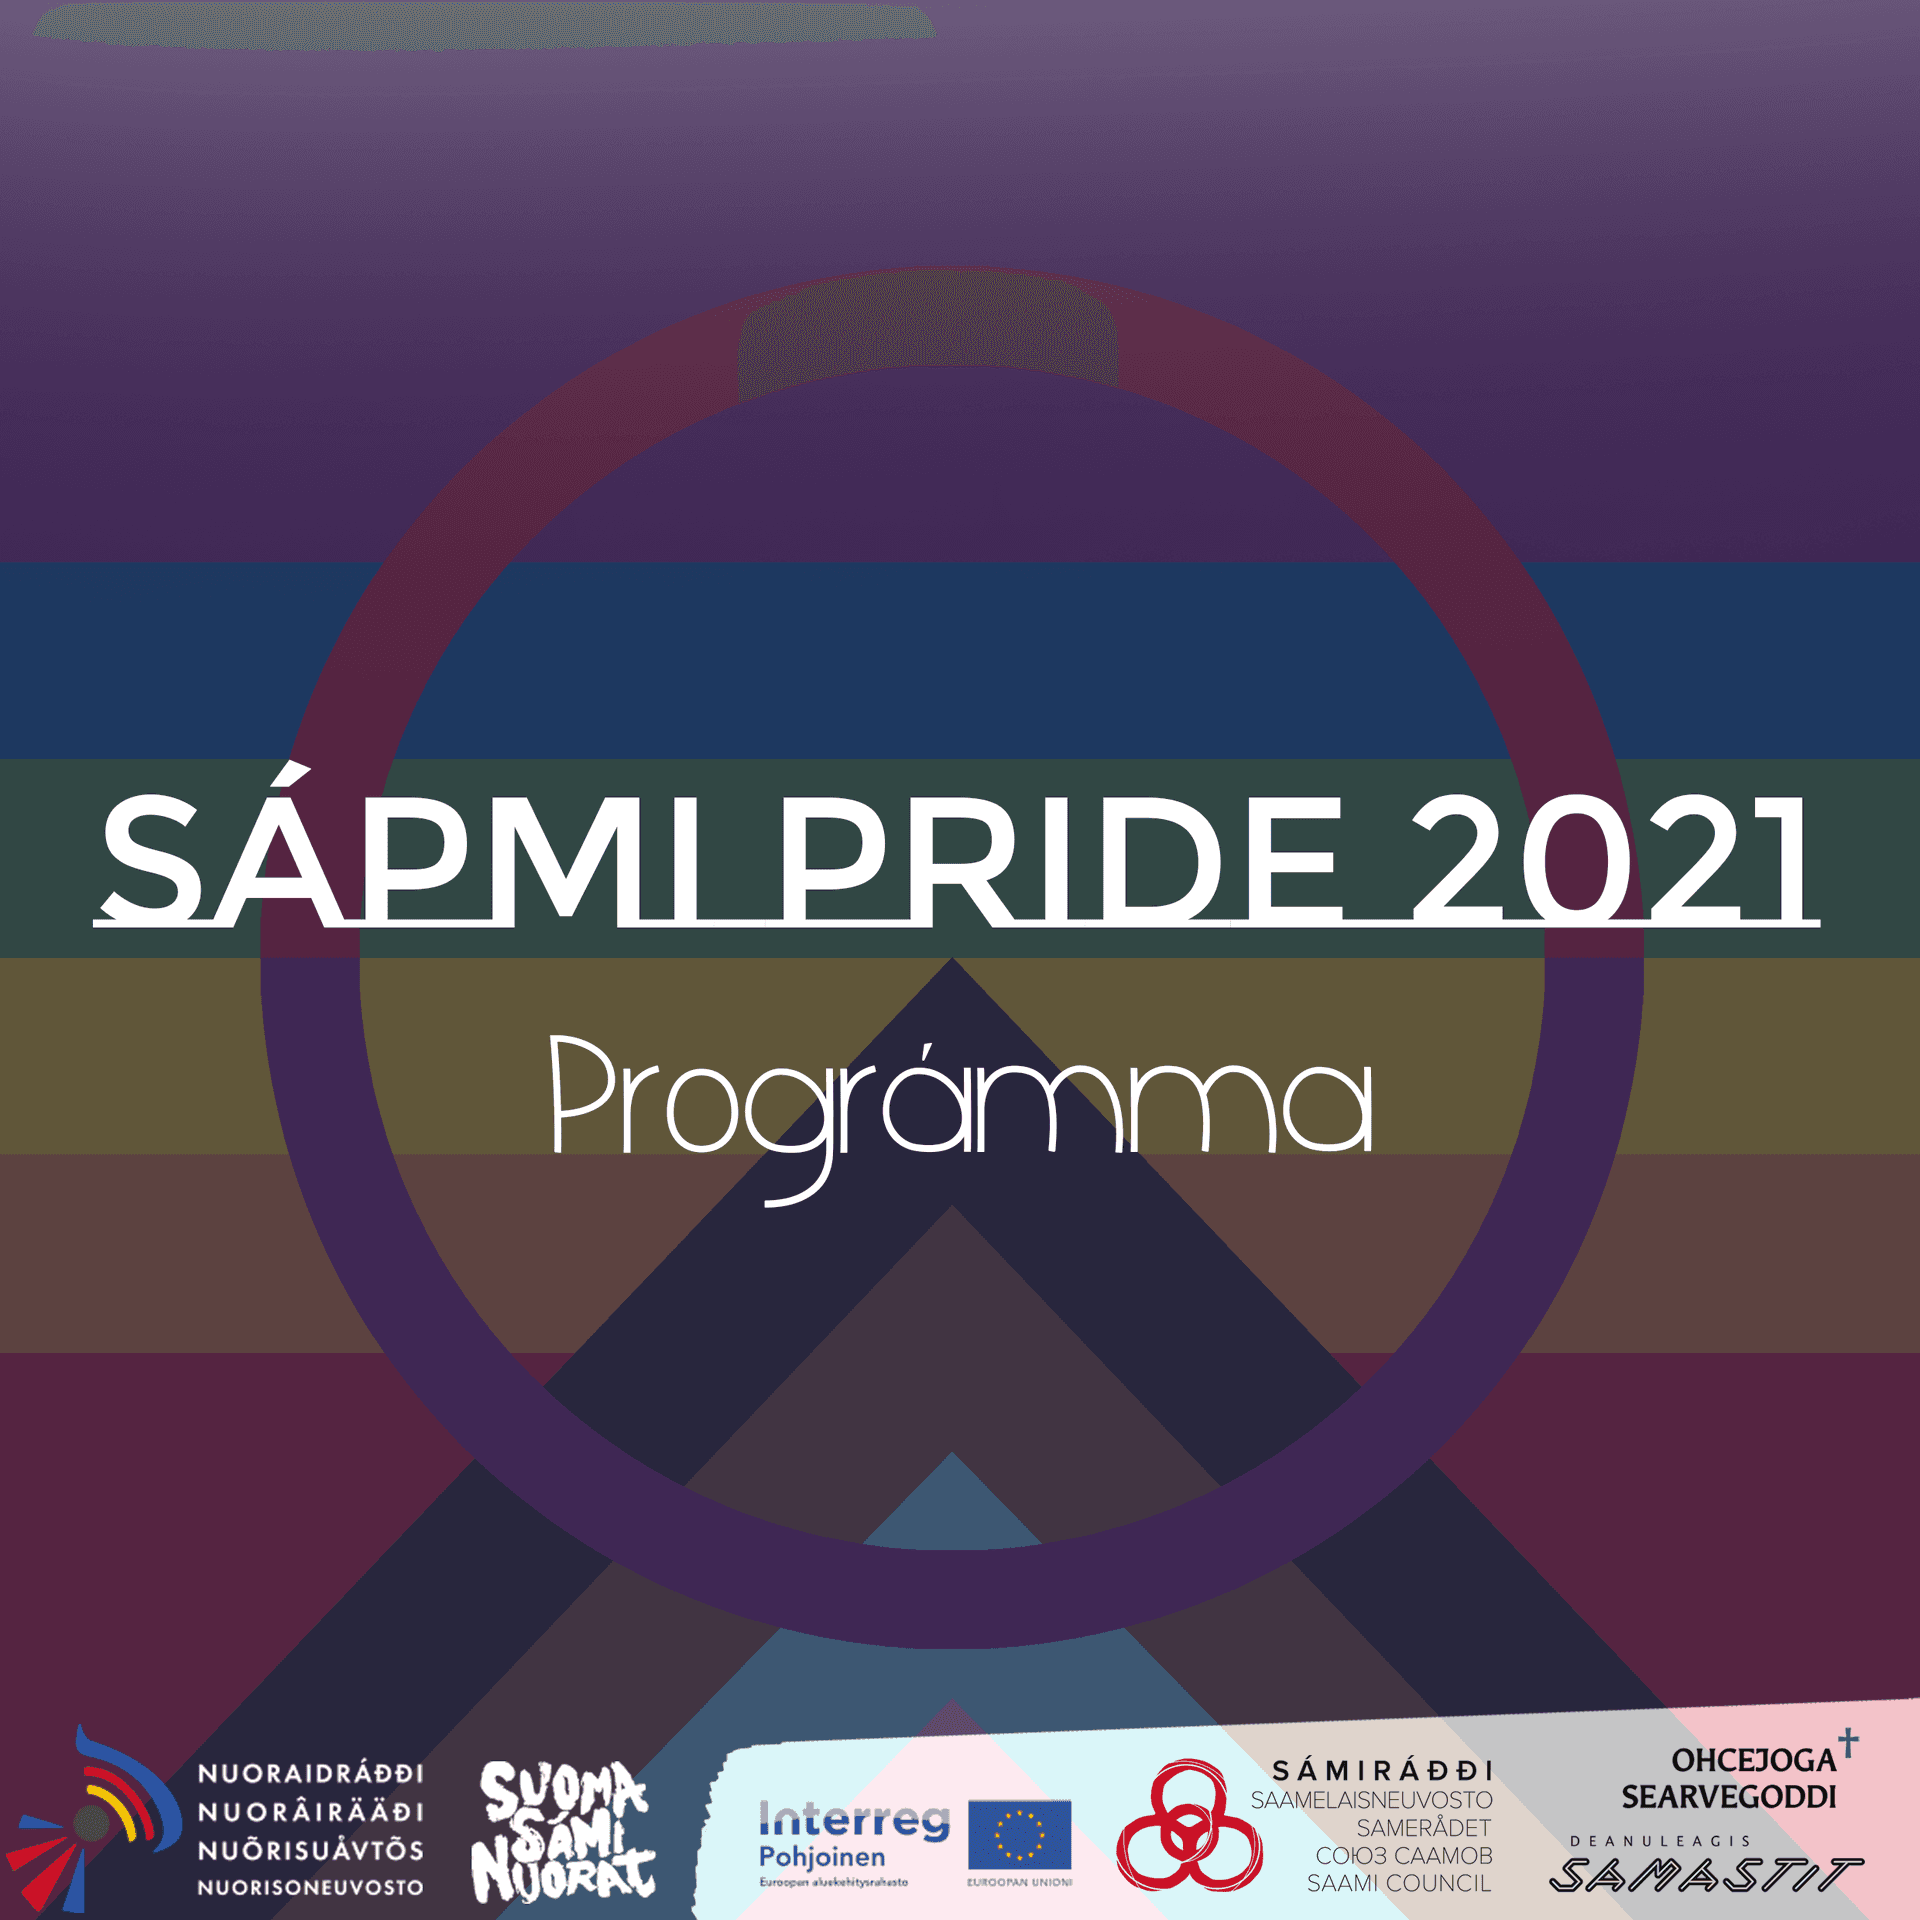 Sapmi pride 2021 program front page with sponsor logos